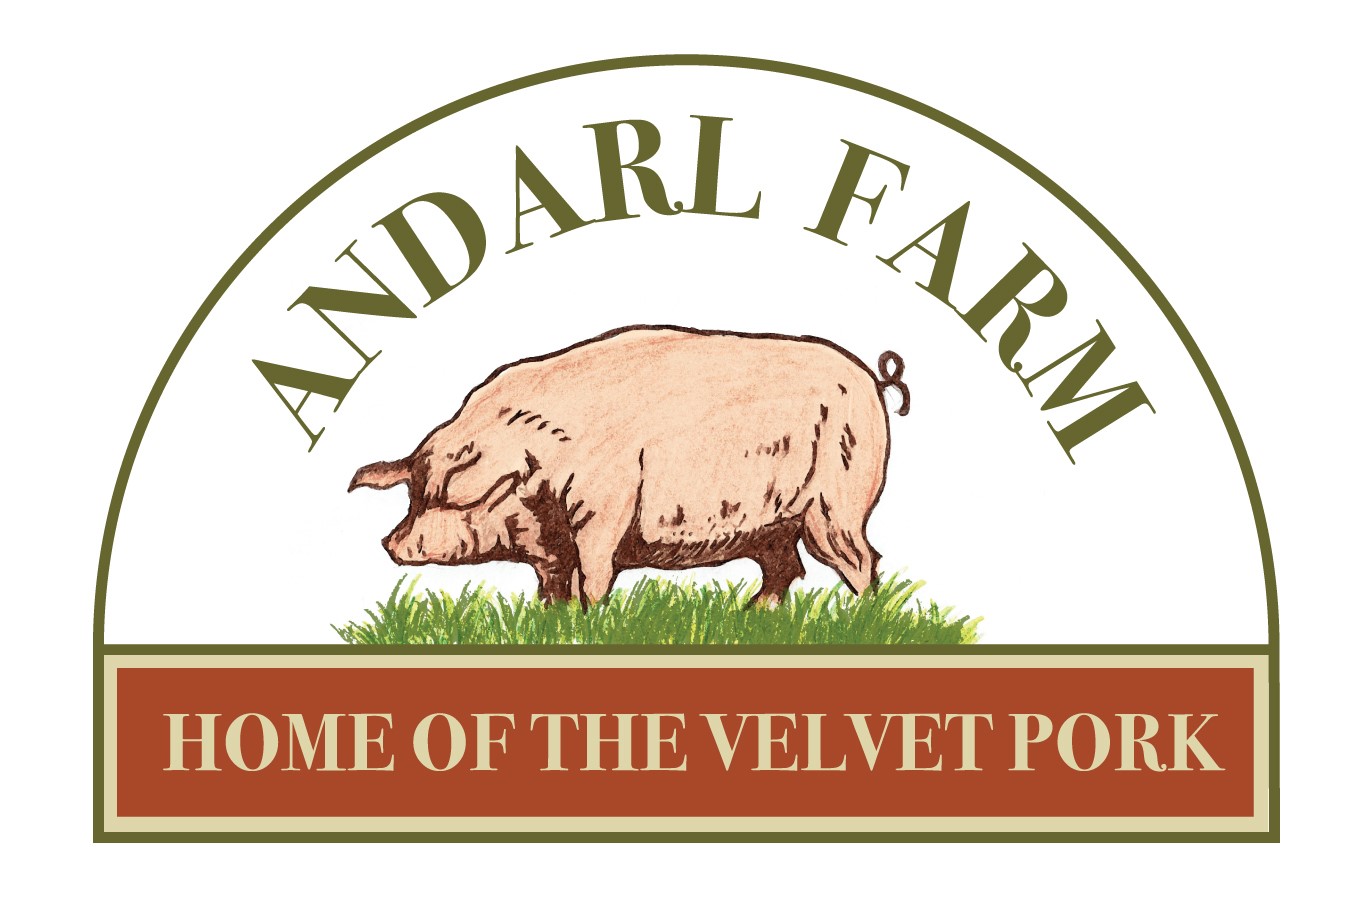 Andarl Farm Ltd